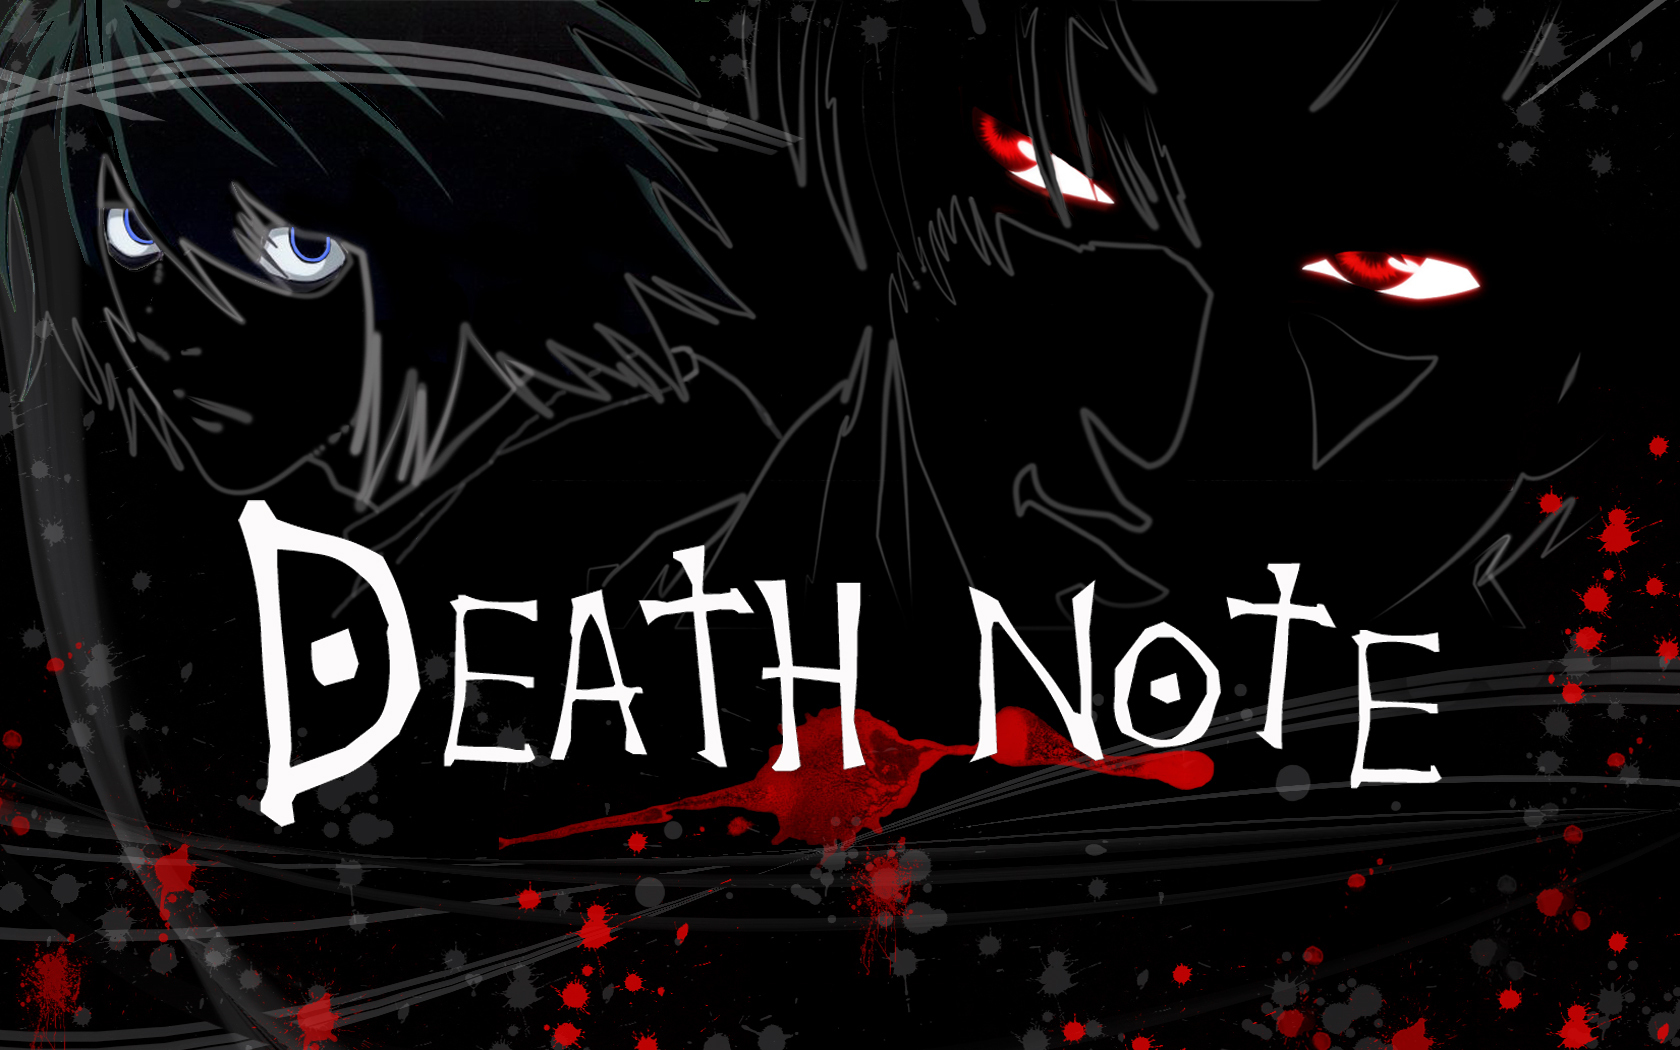 Description Death Note Anime Wallpaper is a hi res Wallpaper for pc